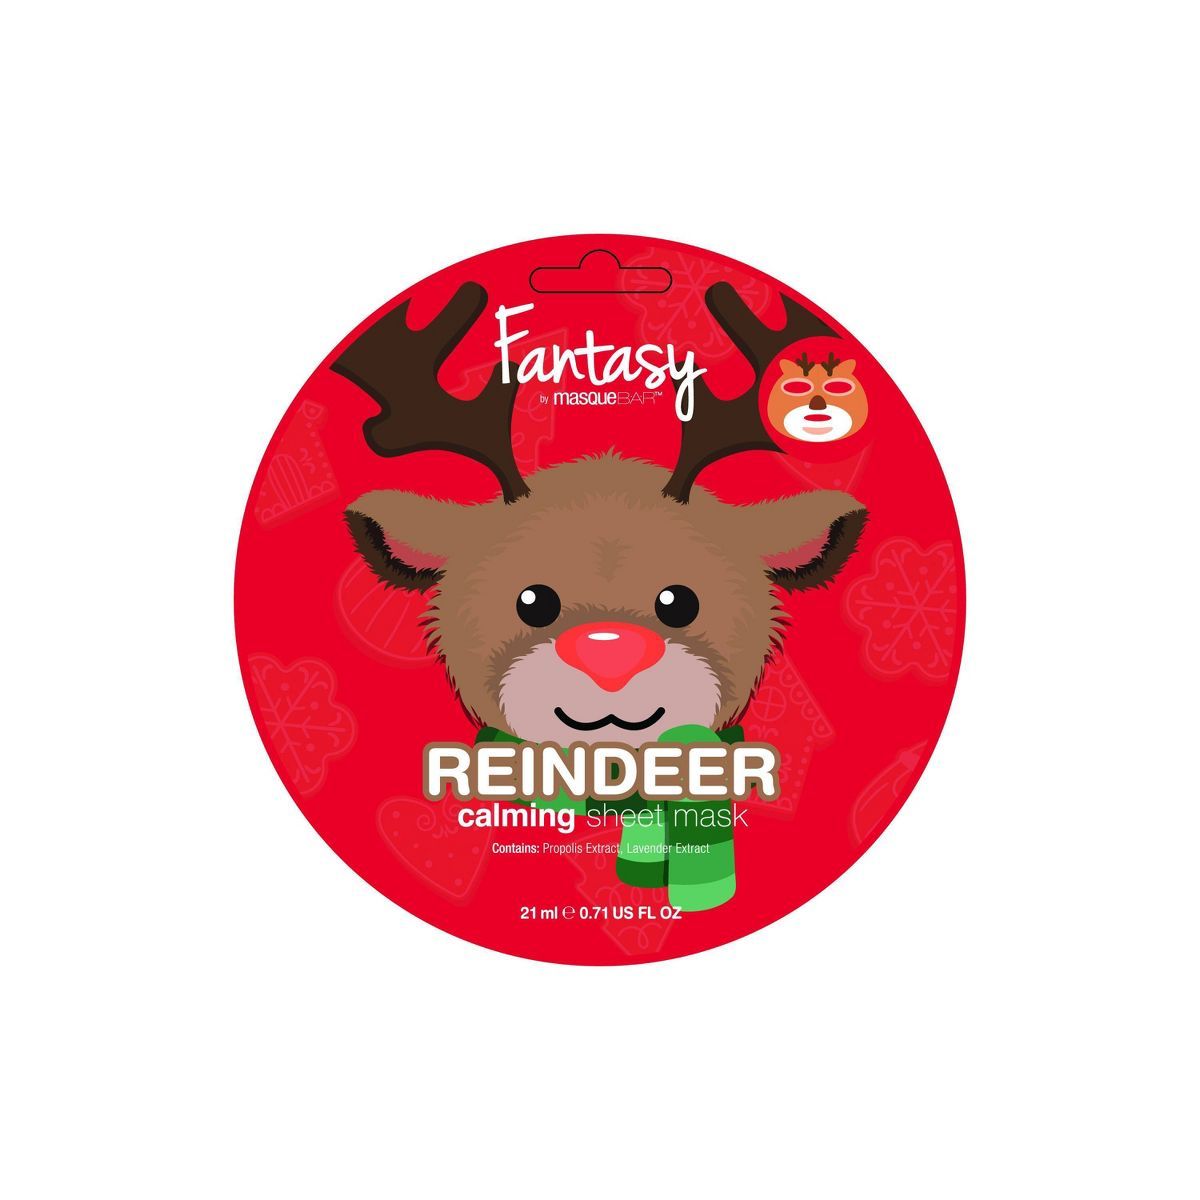 Fantasy by Masque Bar Reindeer Calming Sheet Mask - 0.71 fl oz | Target